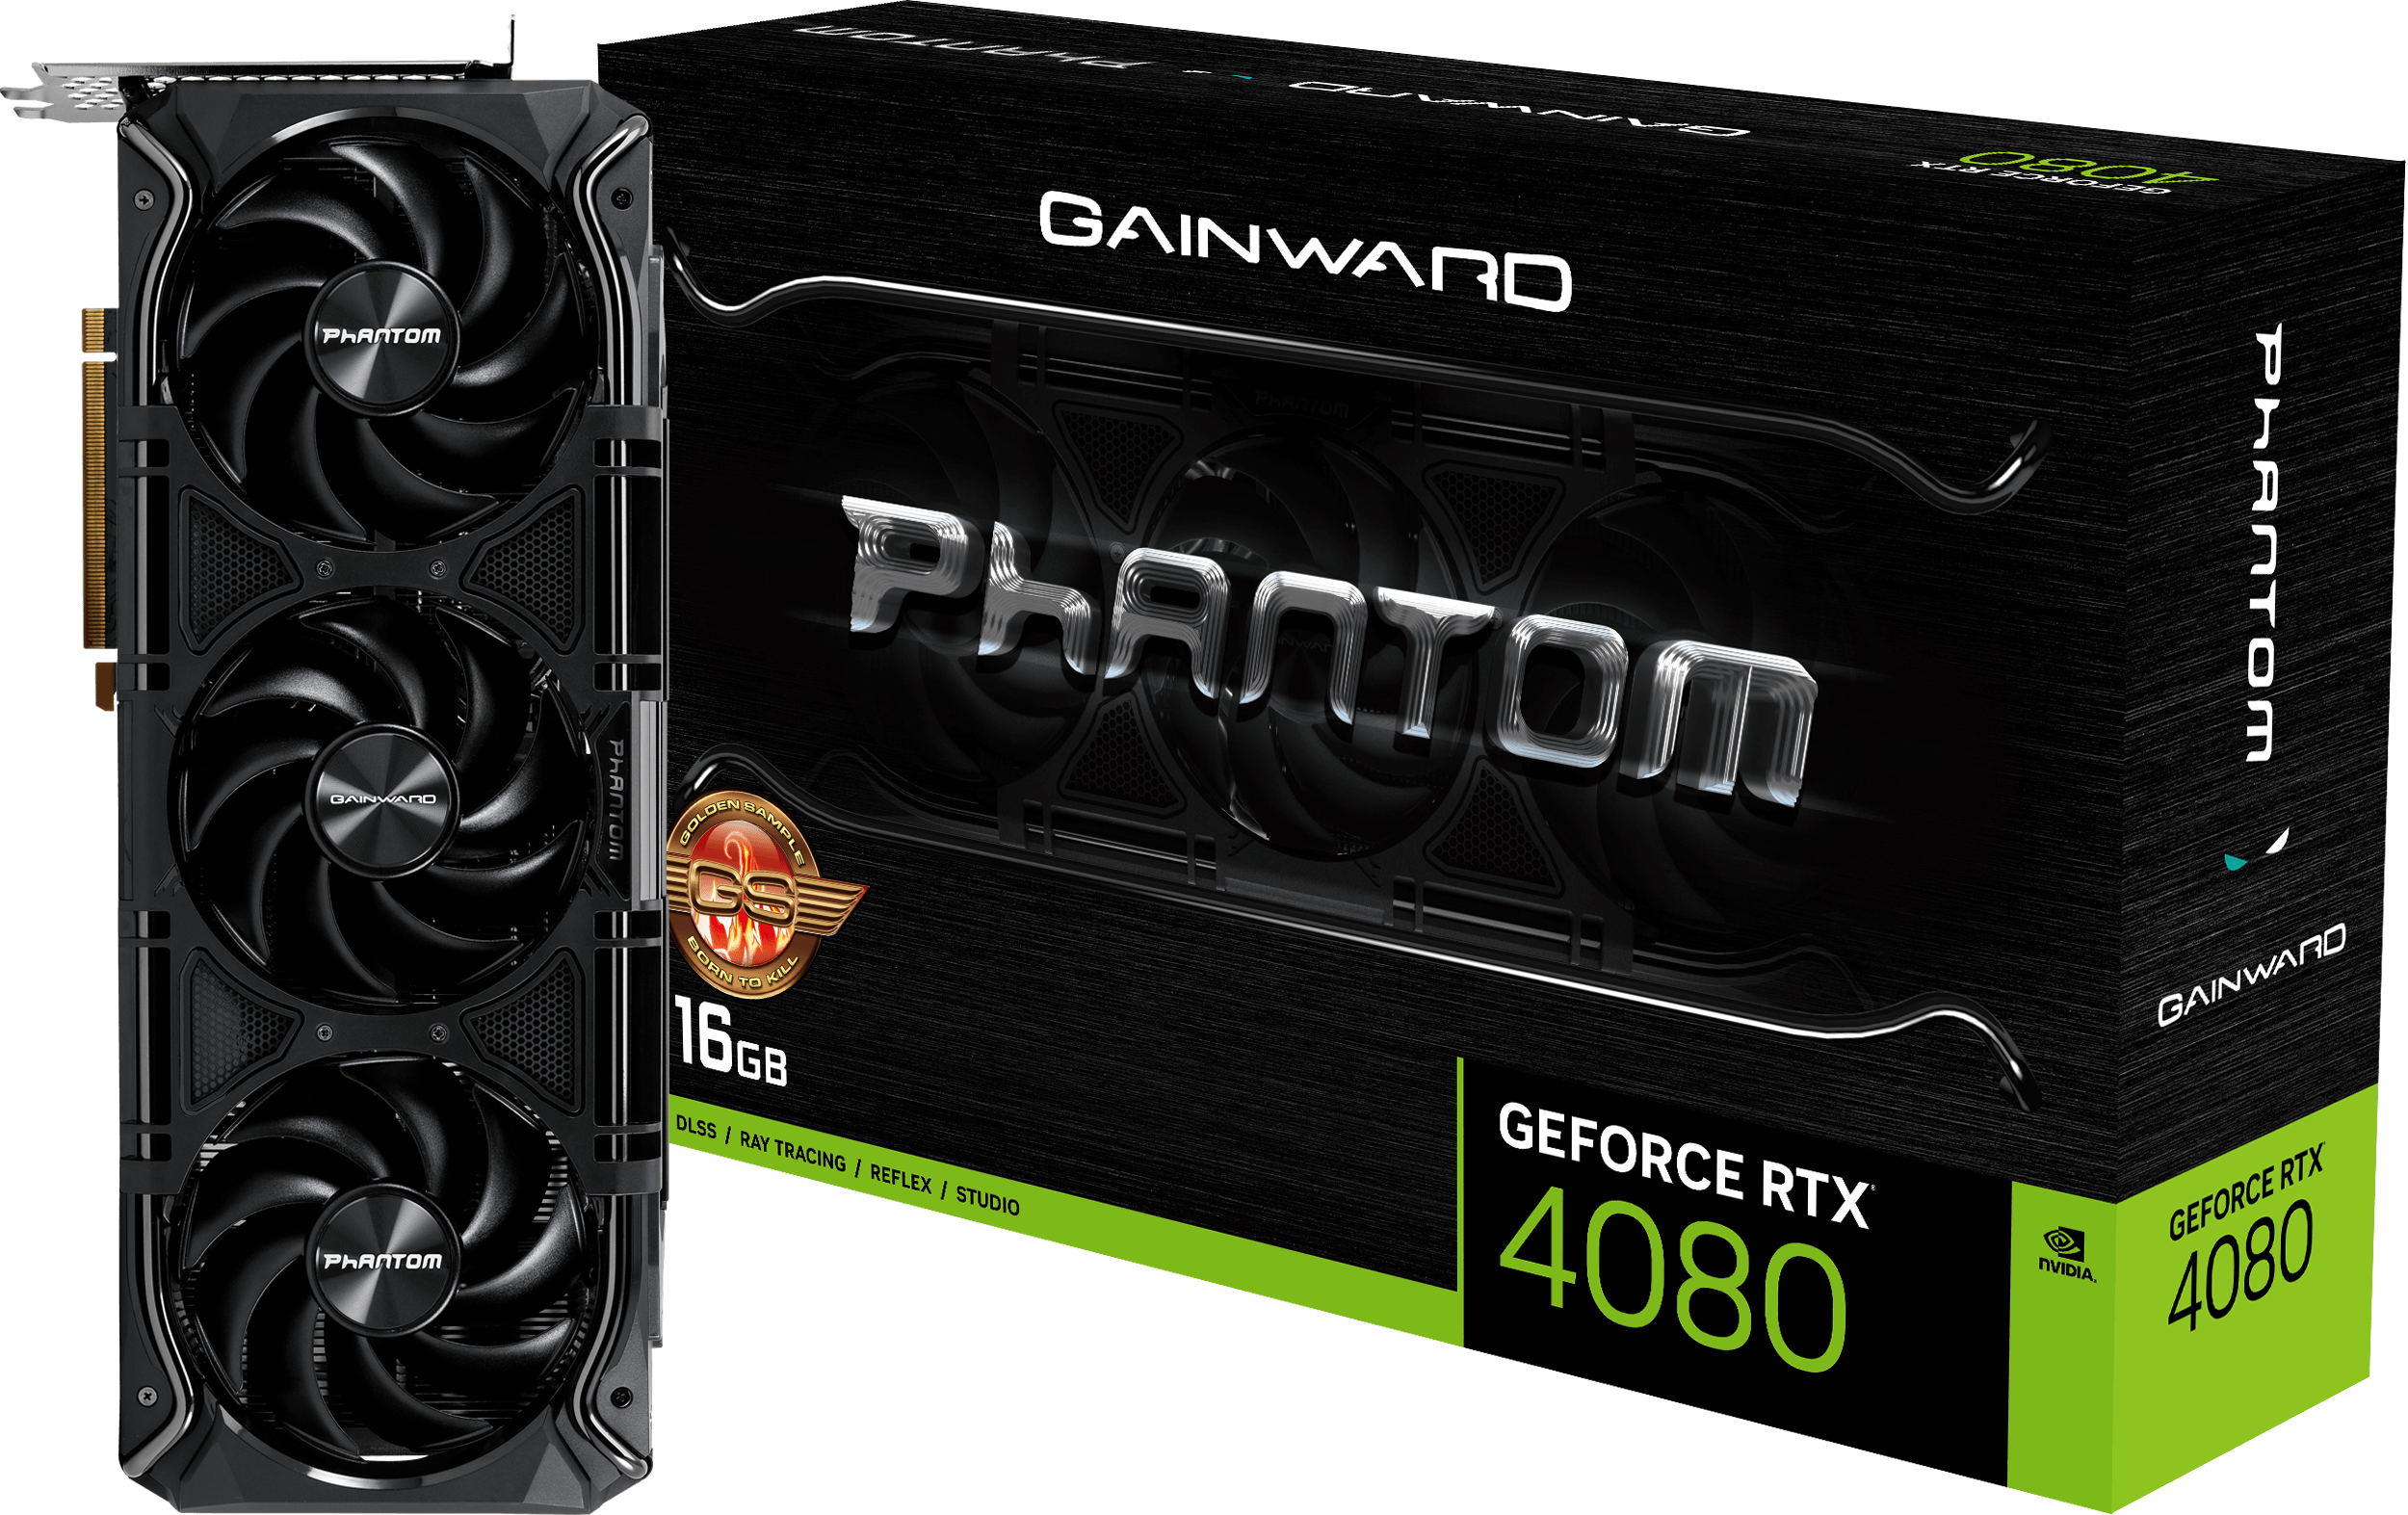 NVIDIA® GeForce RTX™ 4080 GPUを搭載した「GAINWARD GeForce RTX 4080 